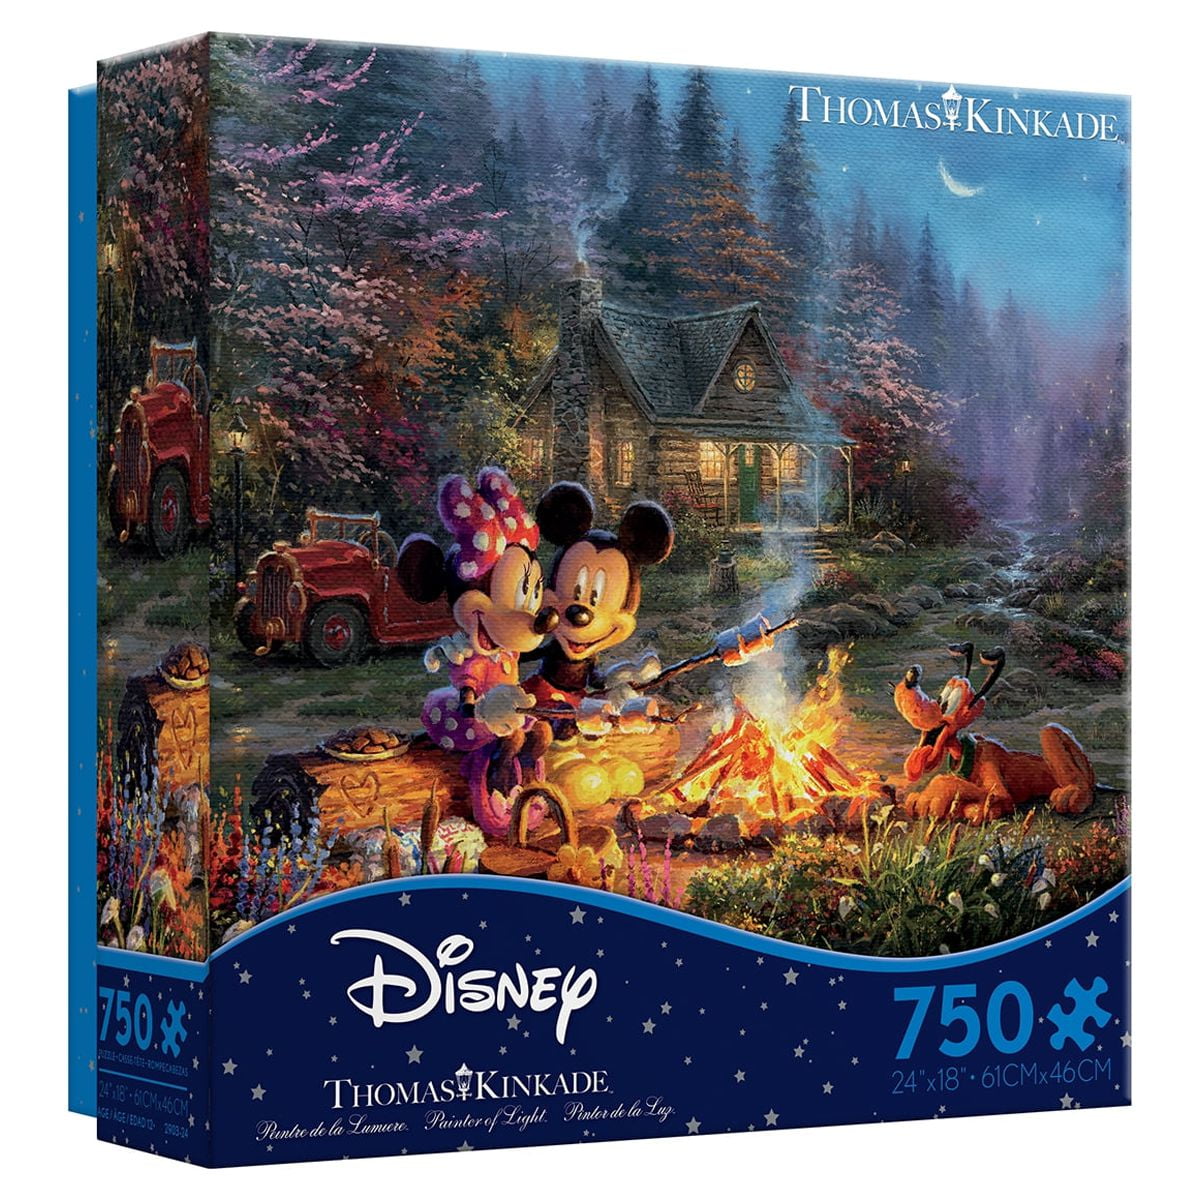 Ceaco Disney Nightmare Before Christmas Three Interlocking Jigsaw Puzzles